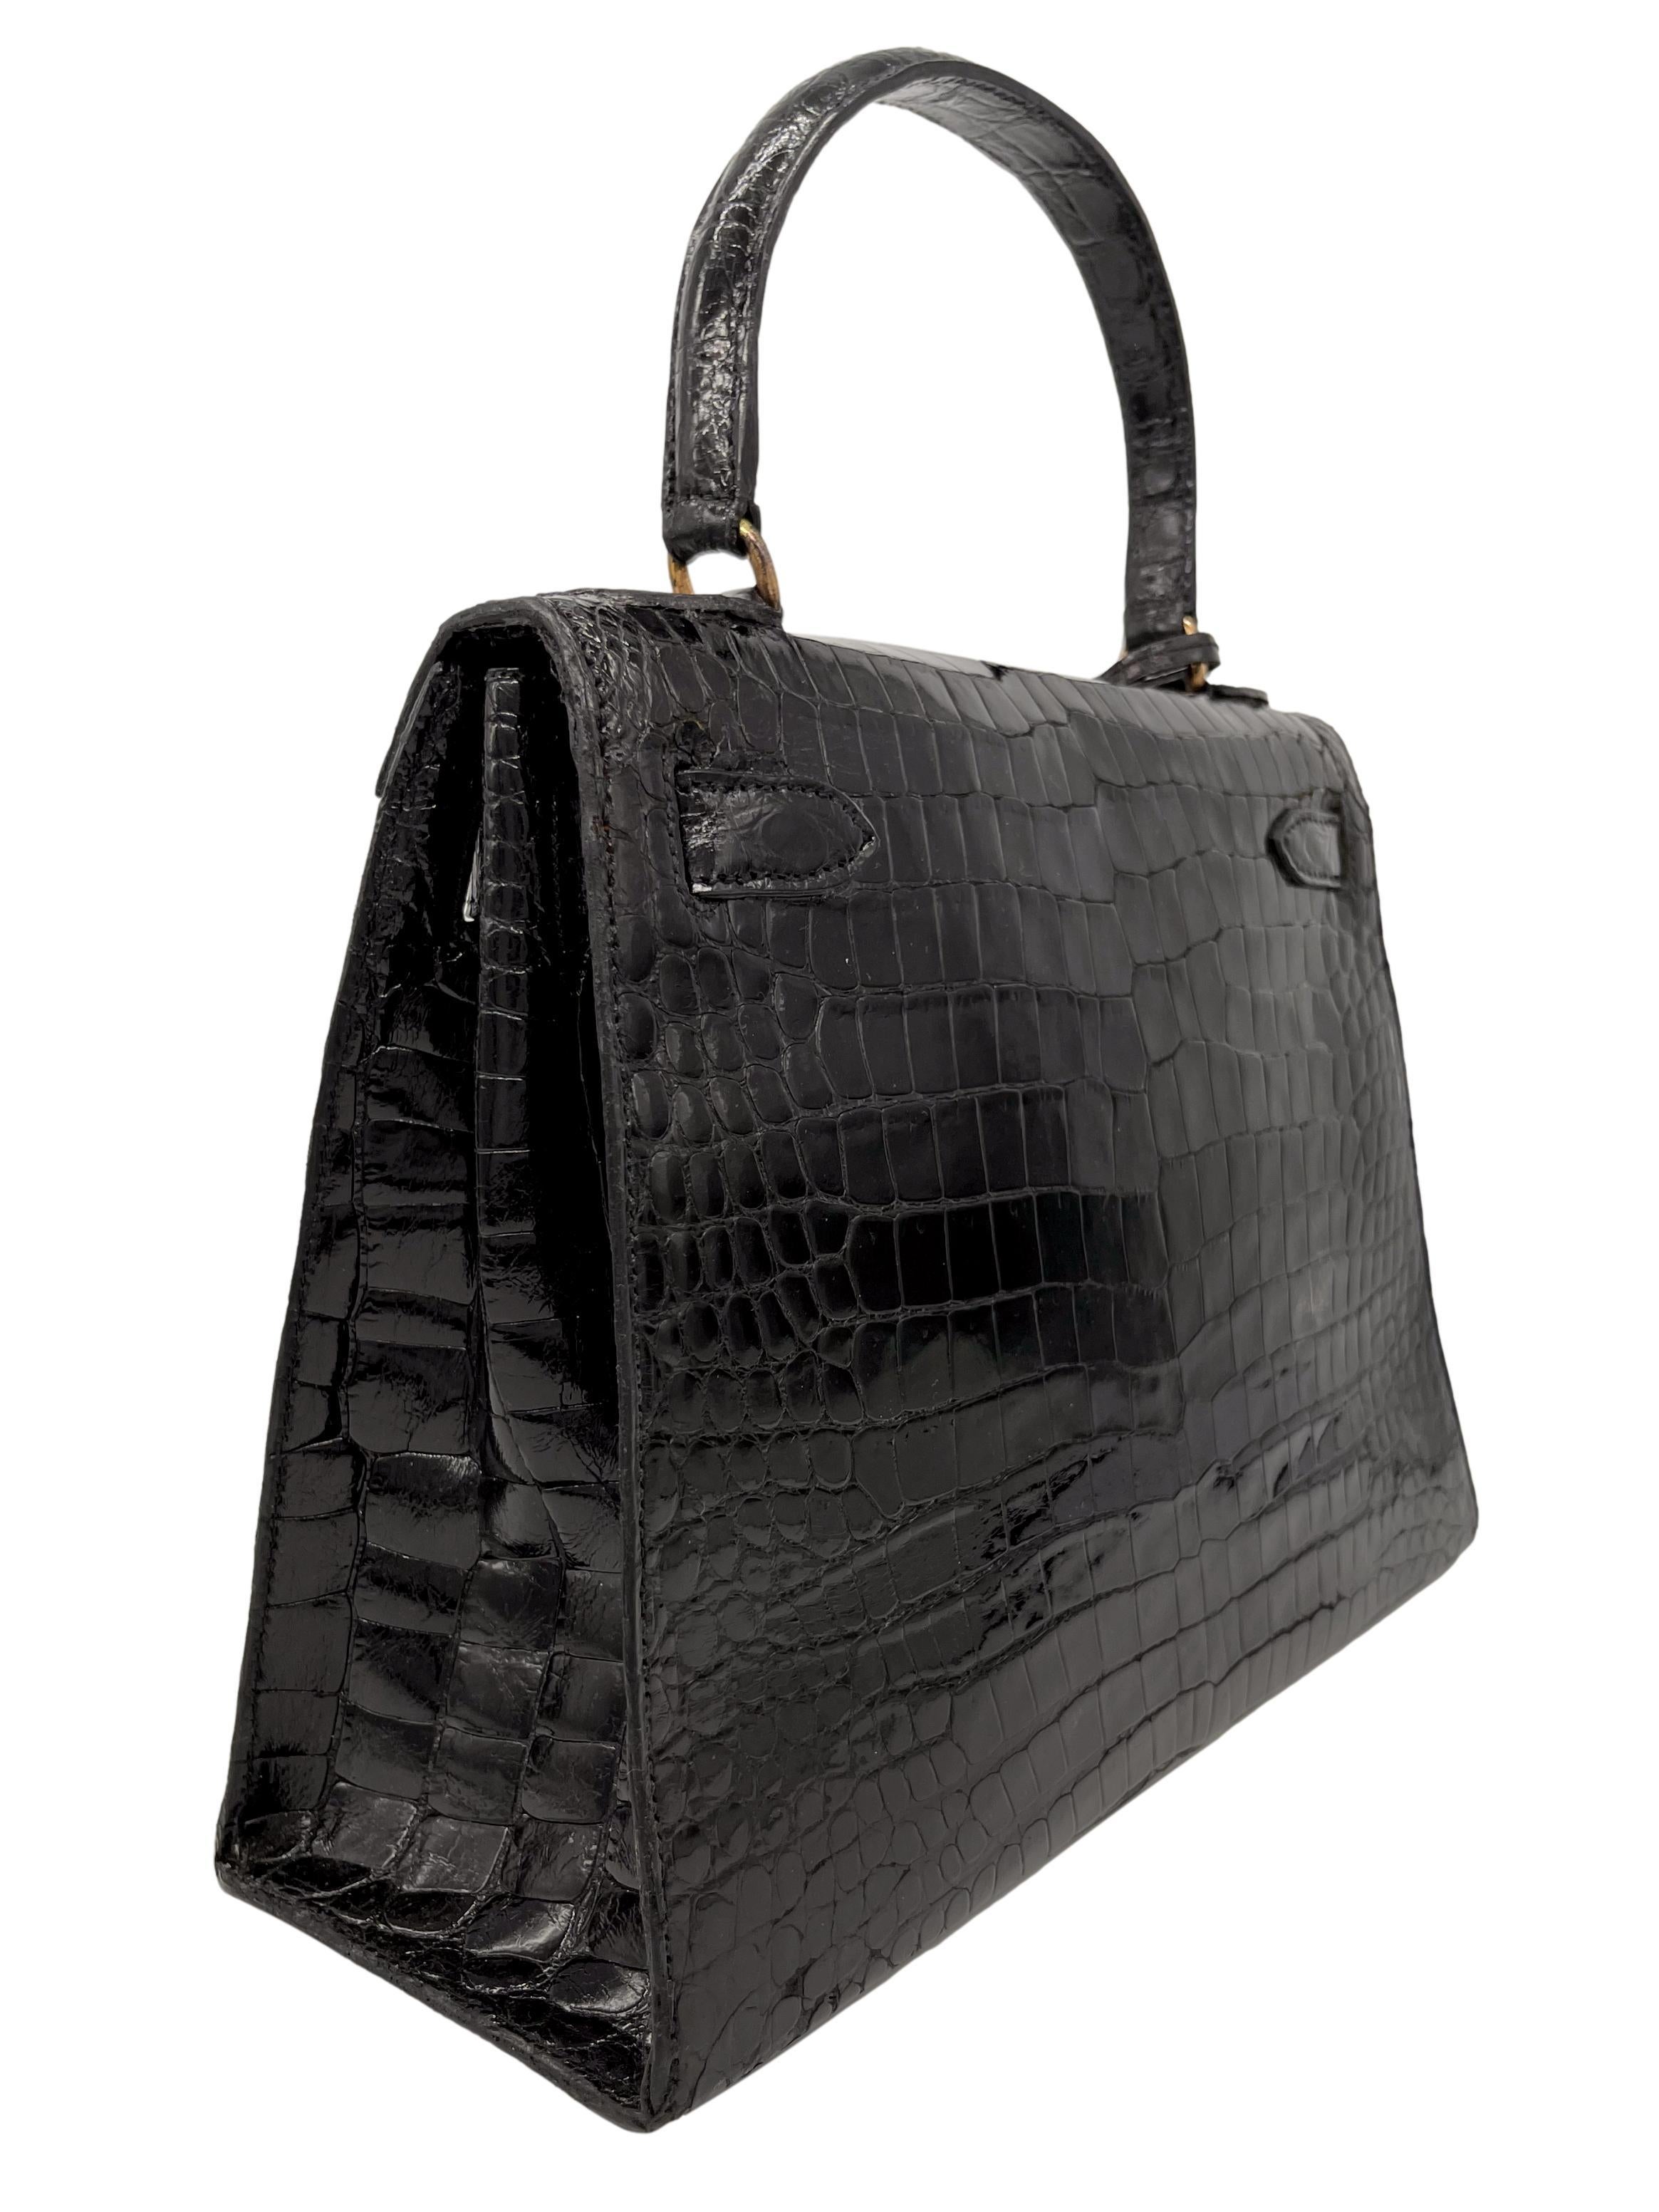 Hermès Shiny Black Porosus Crocodile Kelly Bag with Gold Hardware 28, 1940. For Sale 1